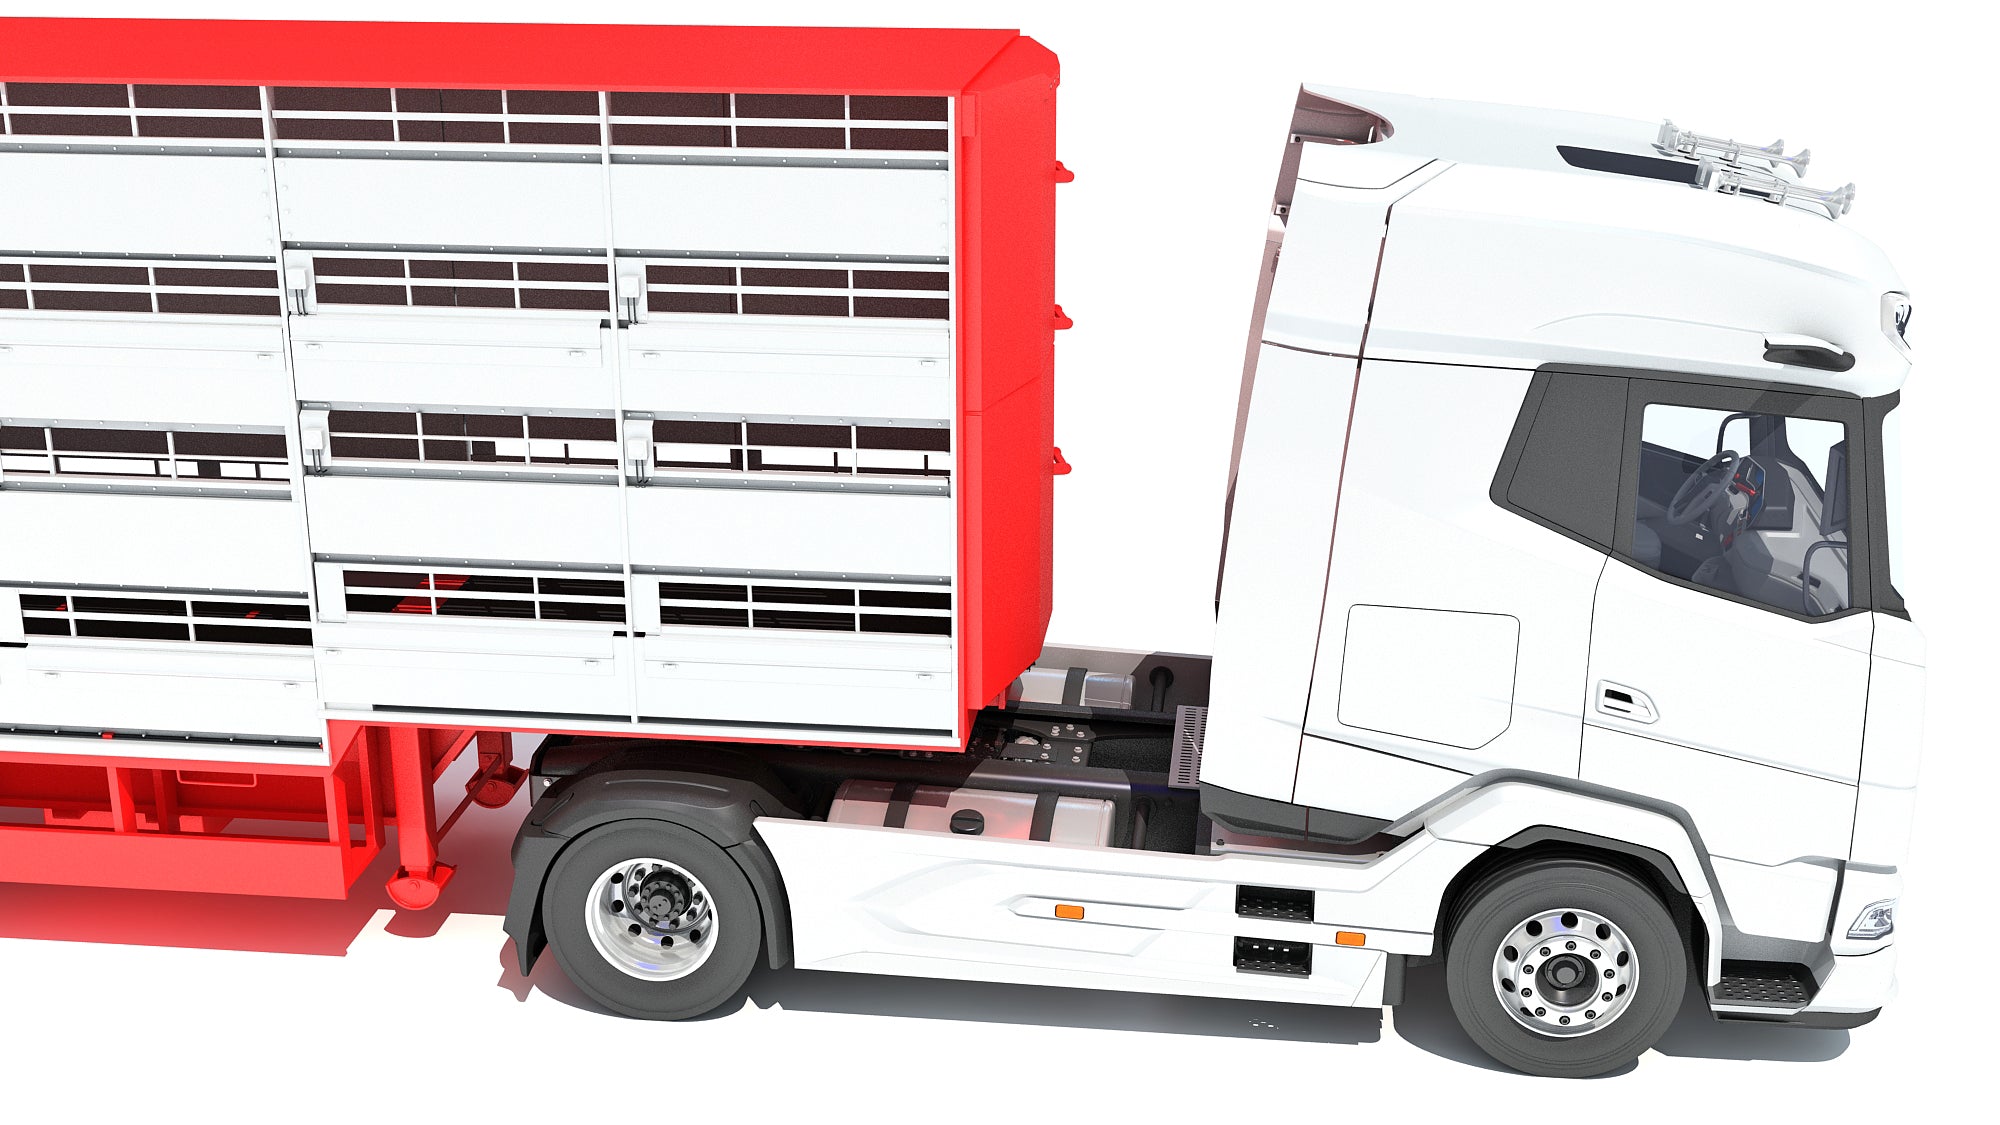 DAF XG Animal Transporter Truck